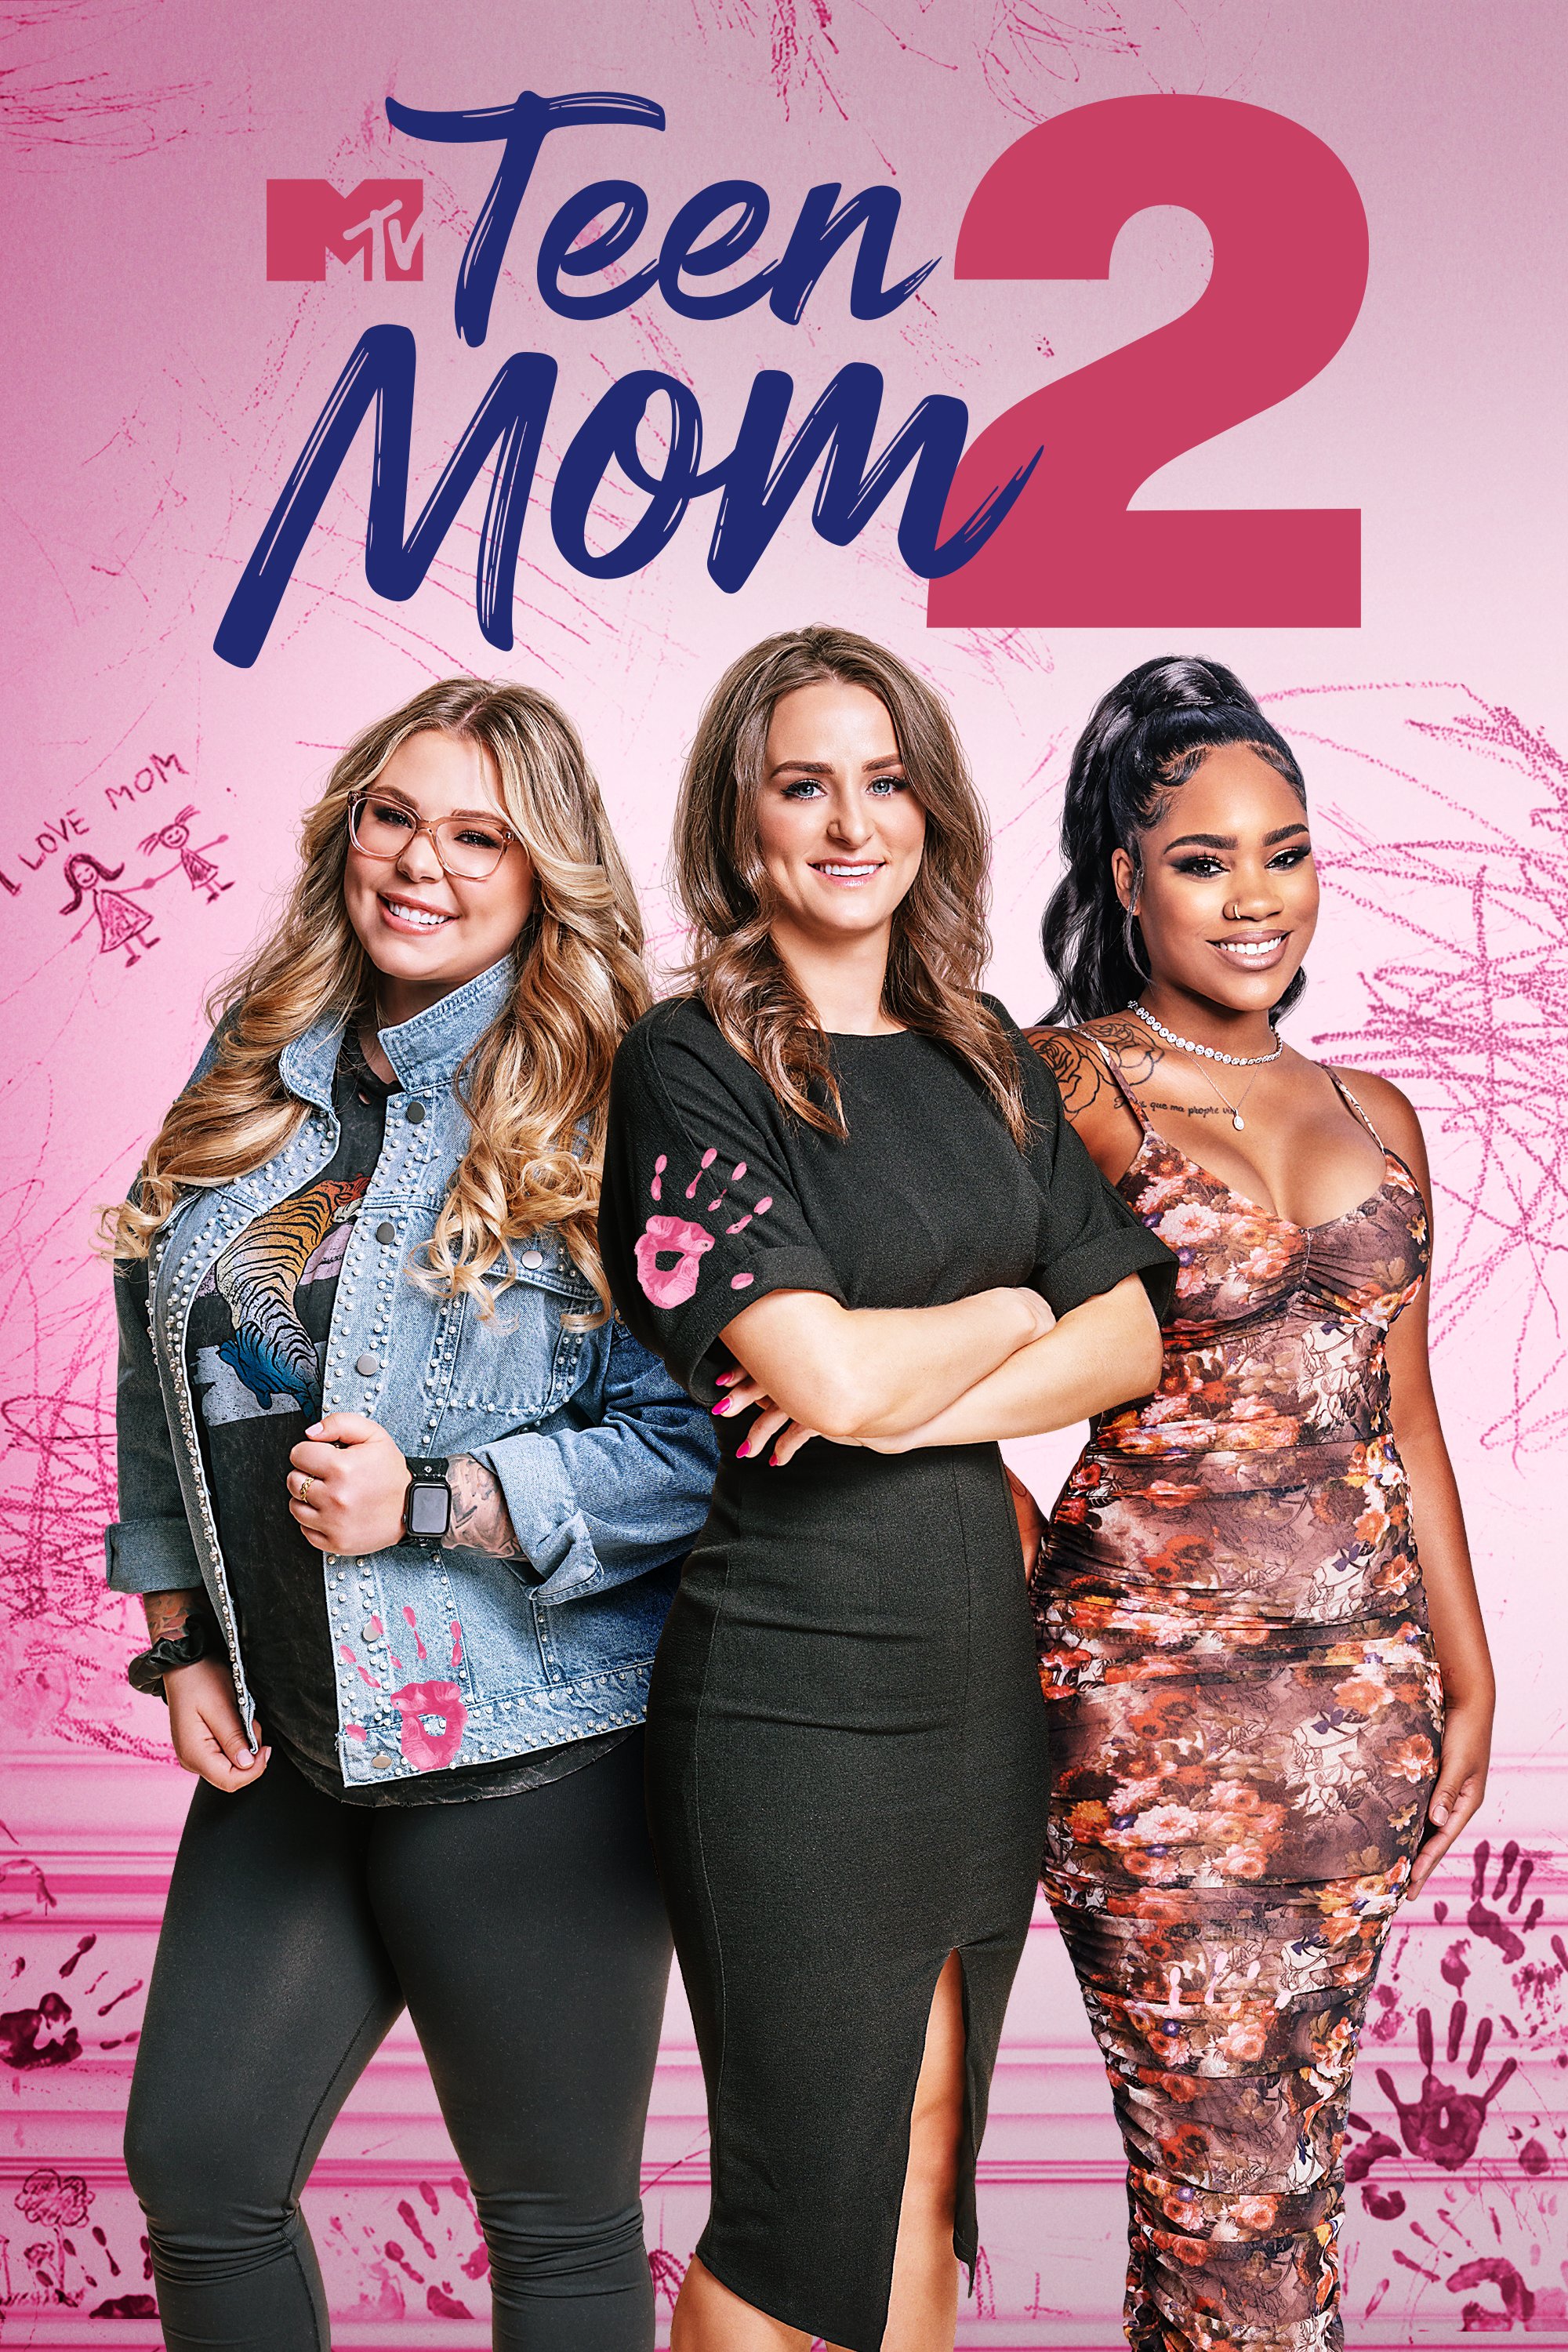 Teen Mom Full Episodes Add